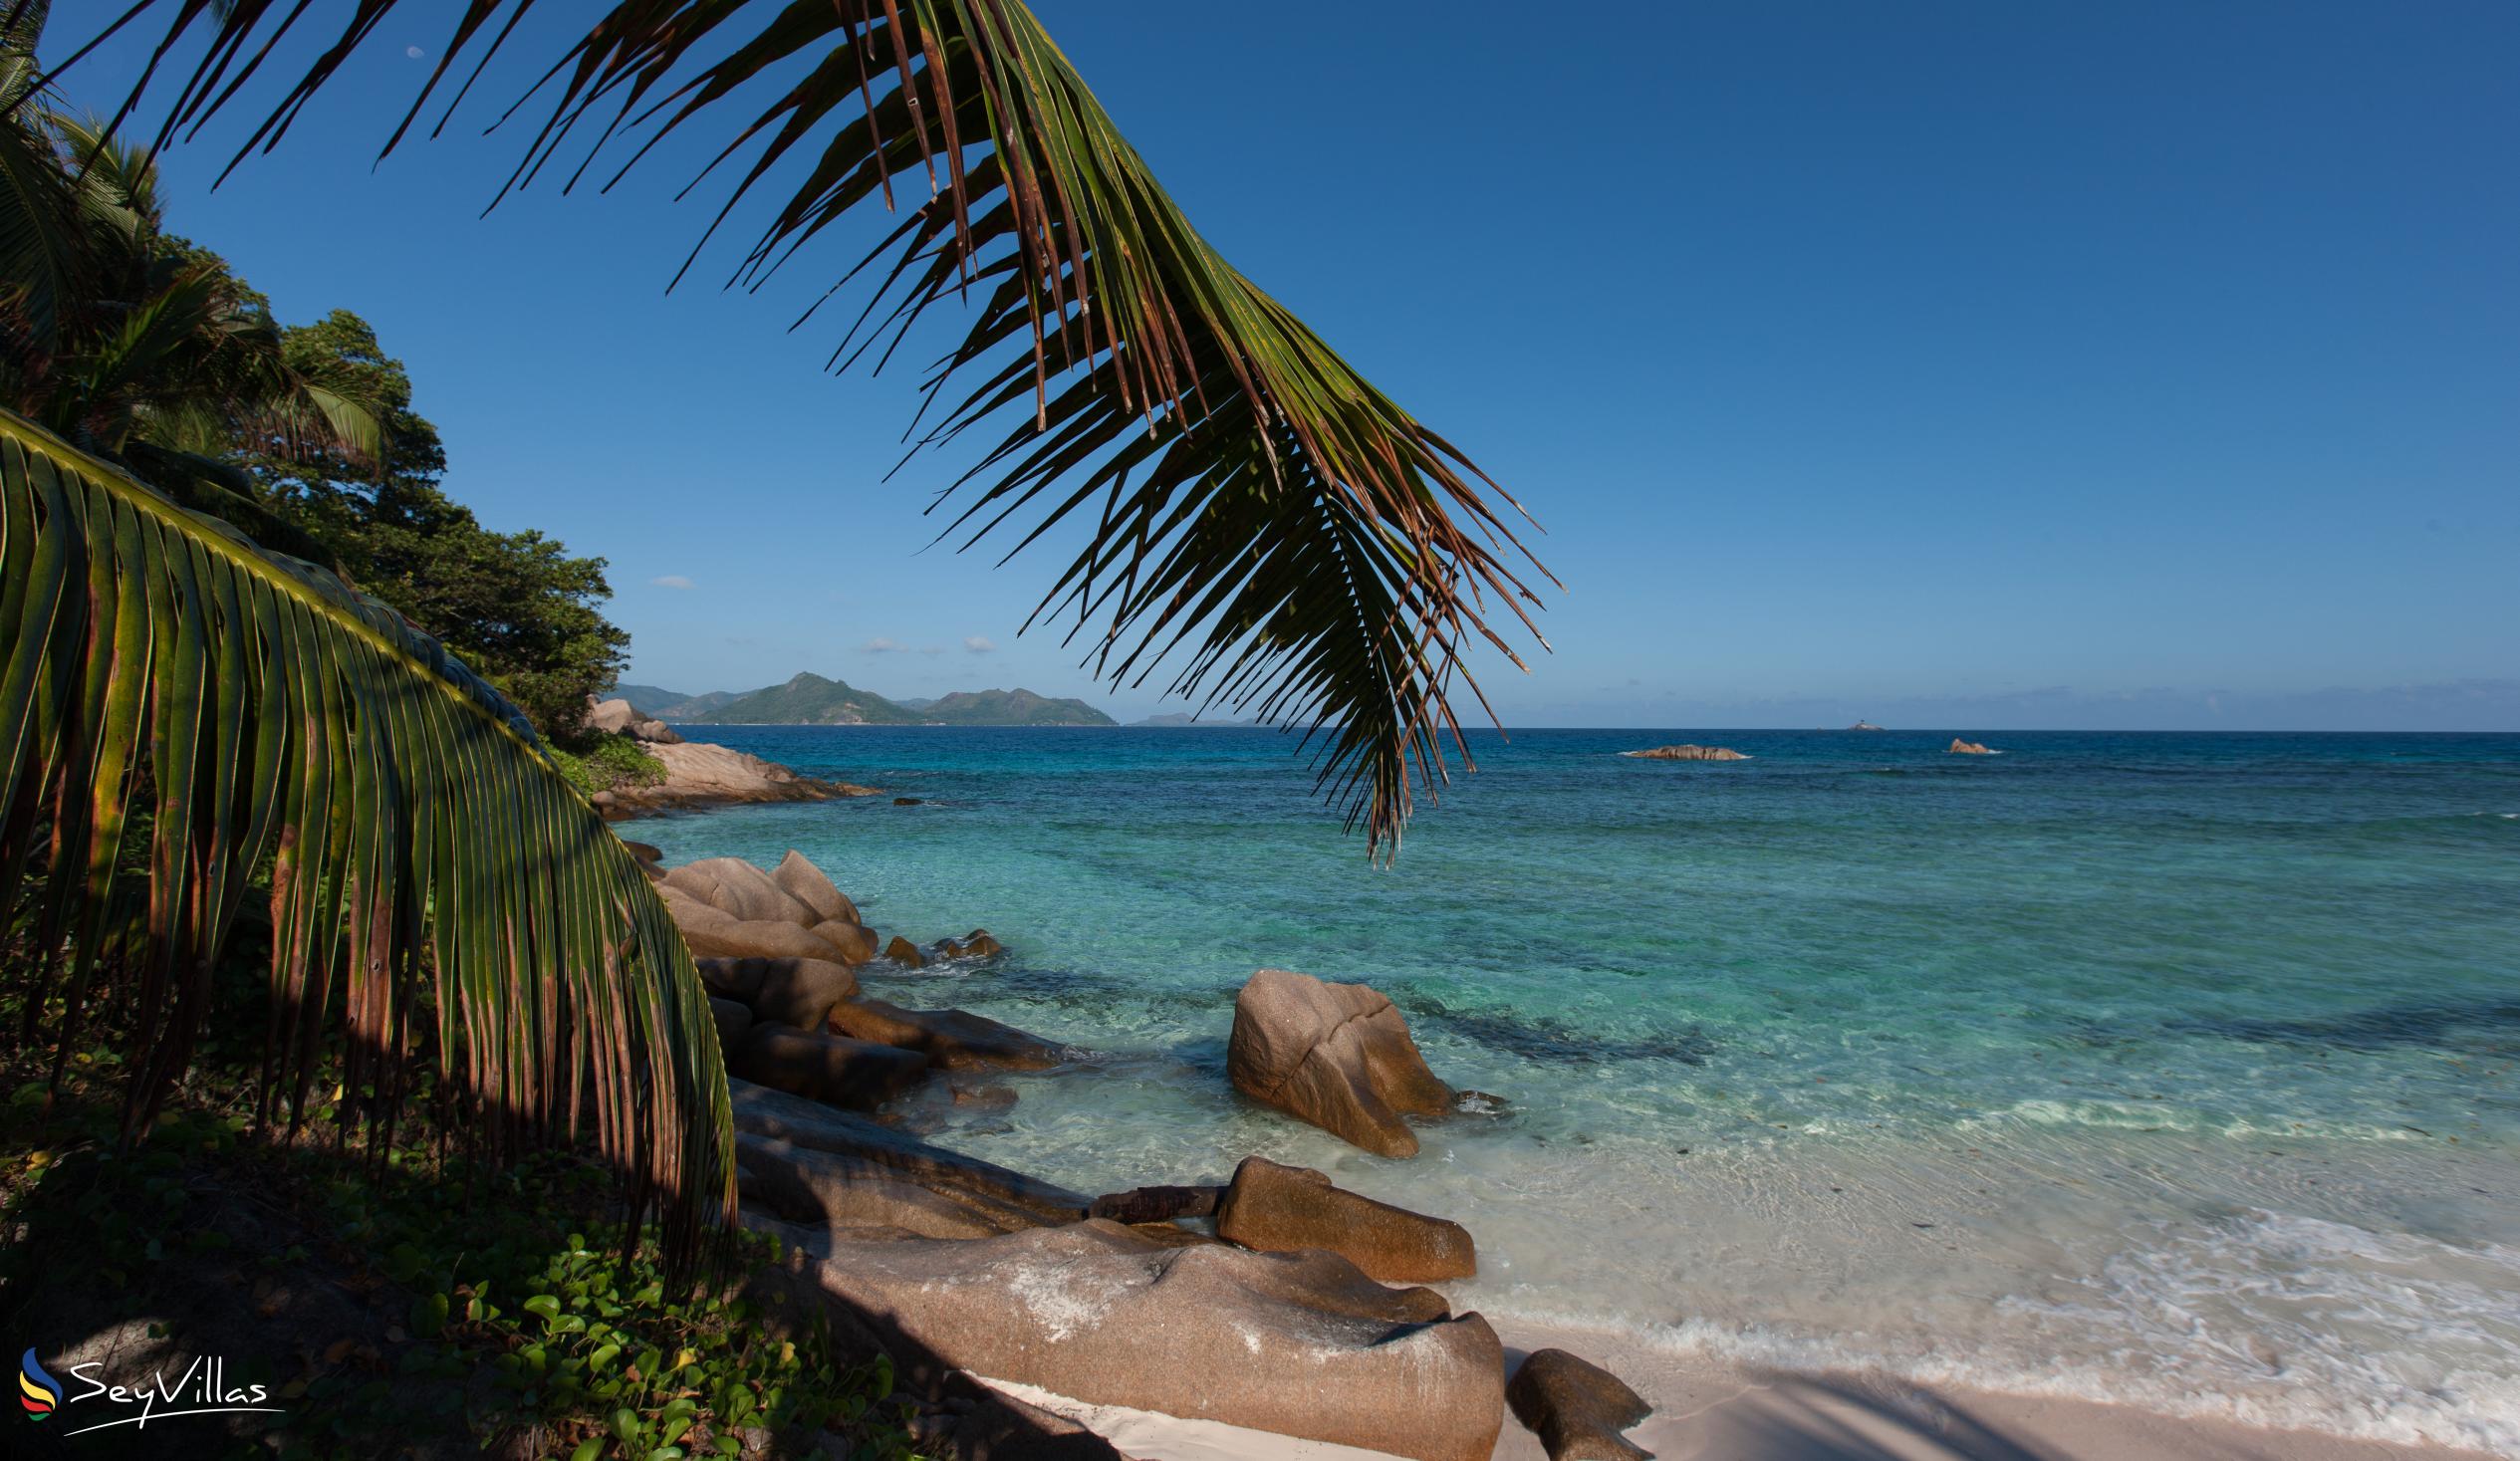 Foto 42: O'Soleil Chalets - Spiagge - La Digue (Seychelles)